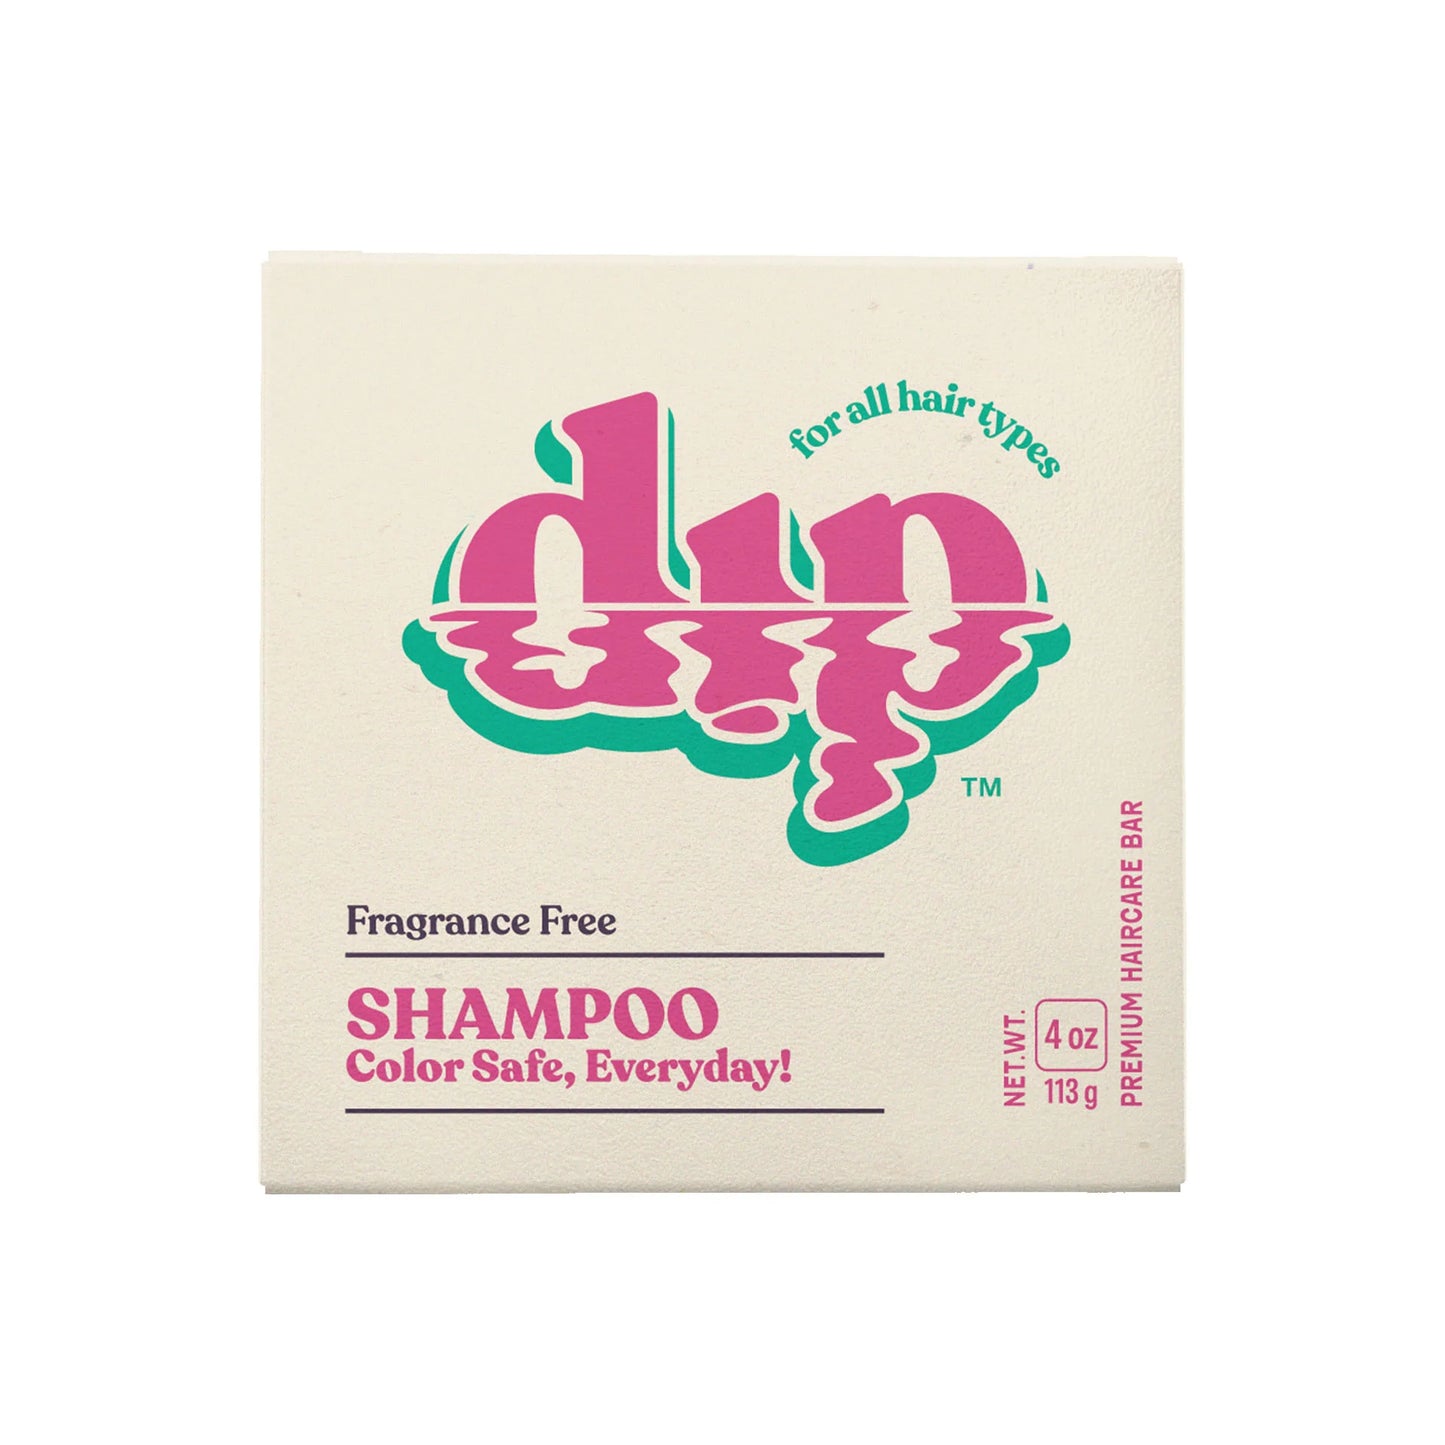 Shampoo Bar - Color Safe Every Day - Fragrance Free